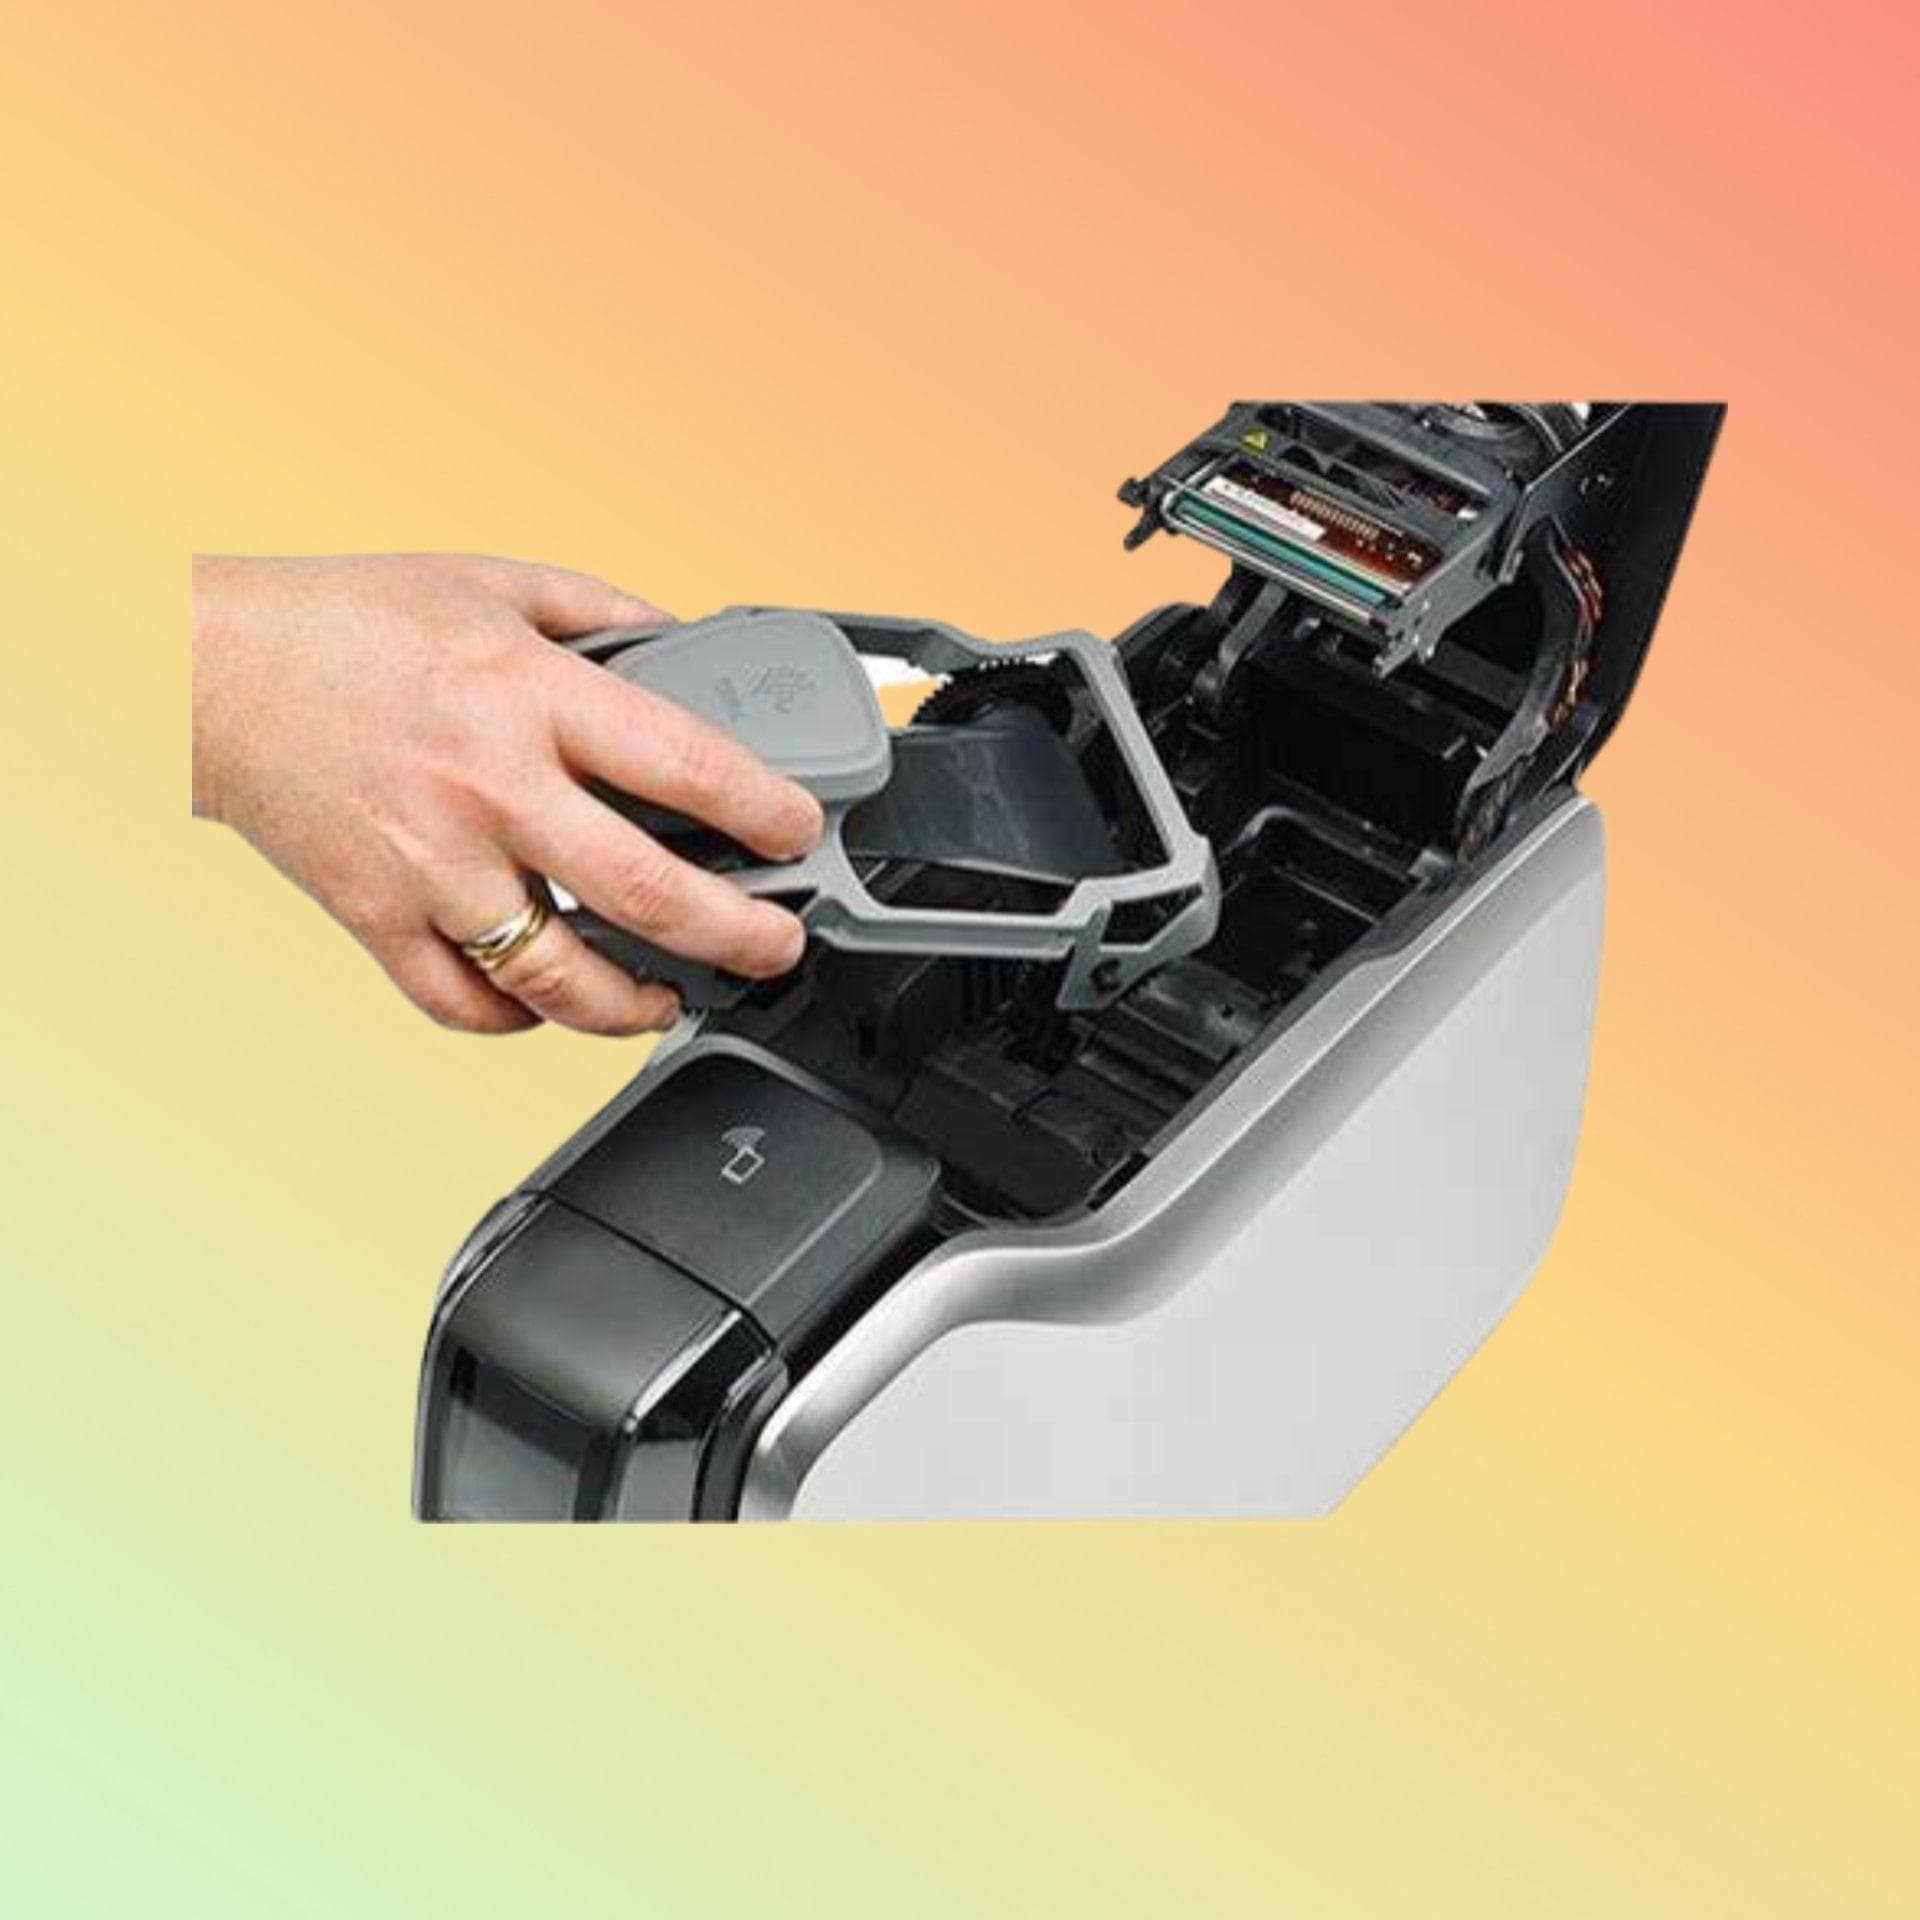 Idcard Printer - Zebra ZC32 Dual Side - Neotech